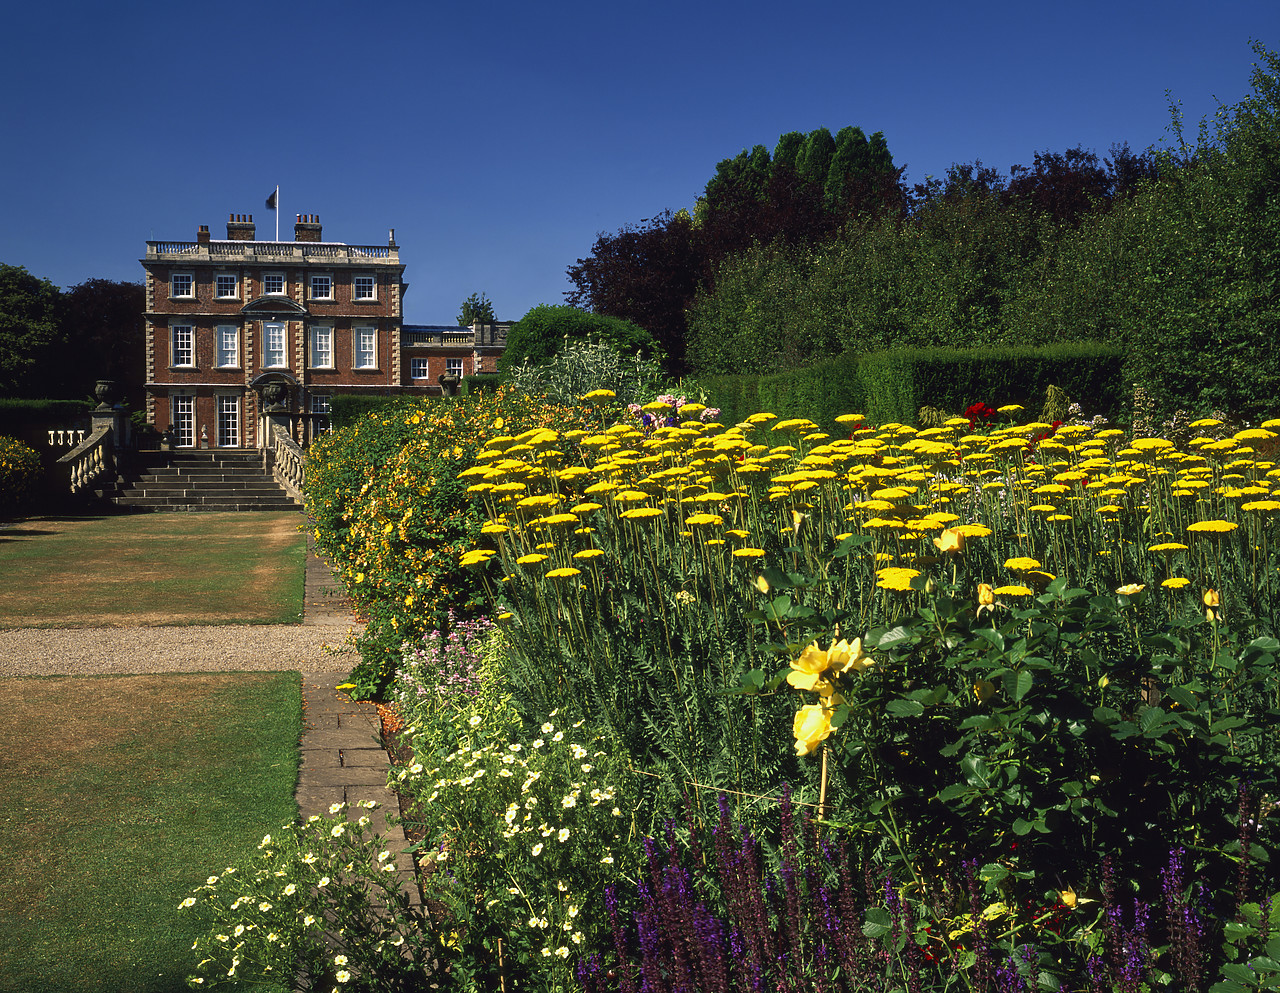 #060111-2 - Newby Hall & Gardens, near Ripon, North Yorkshire, England